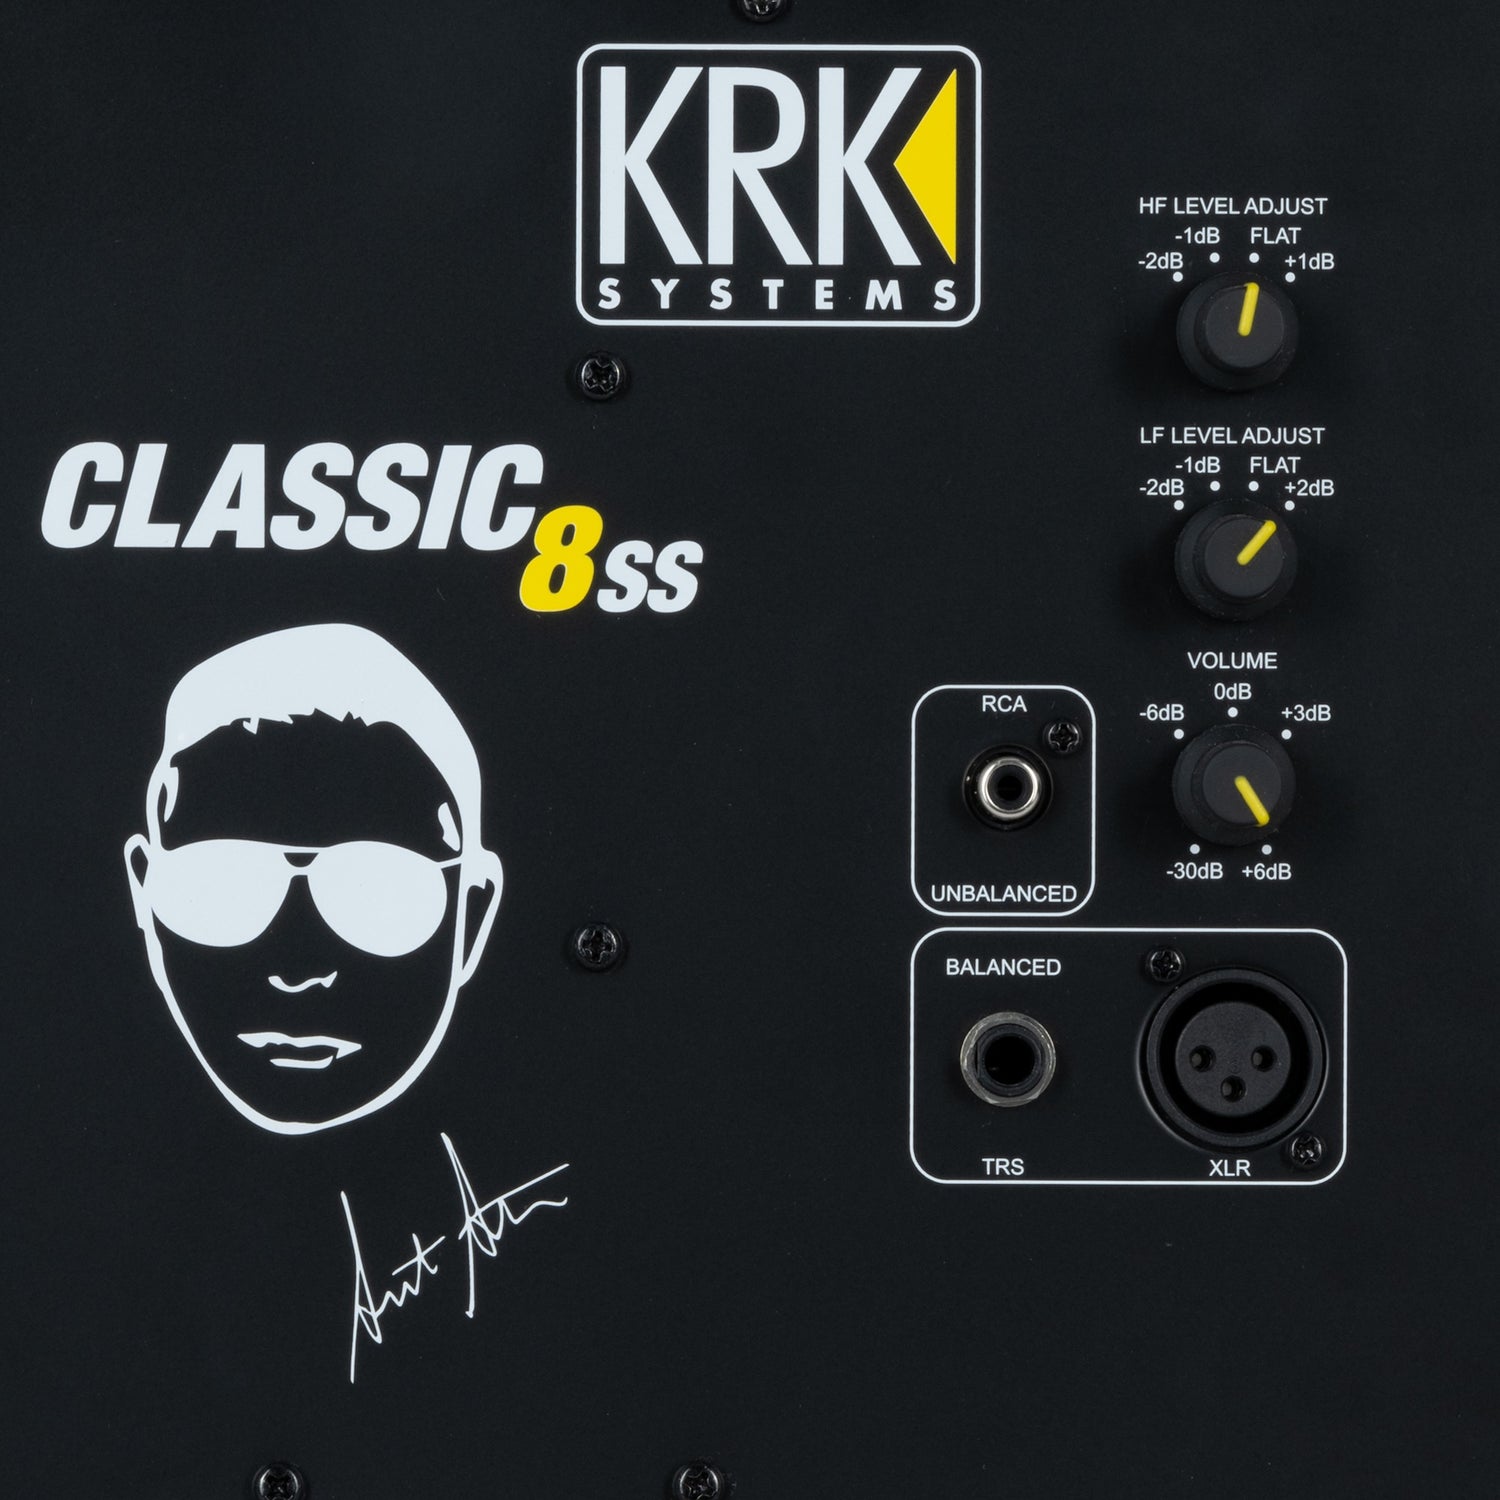 KRK Scott Storch Classic 8ss Feature Back